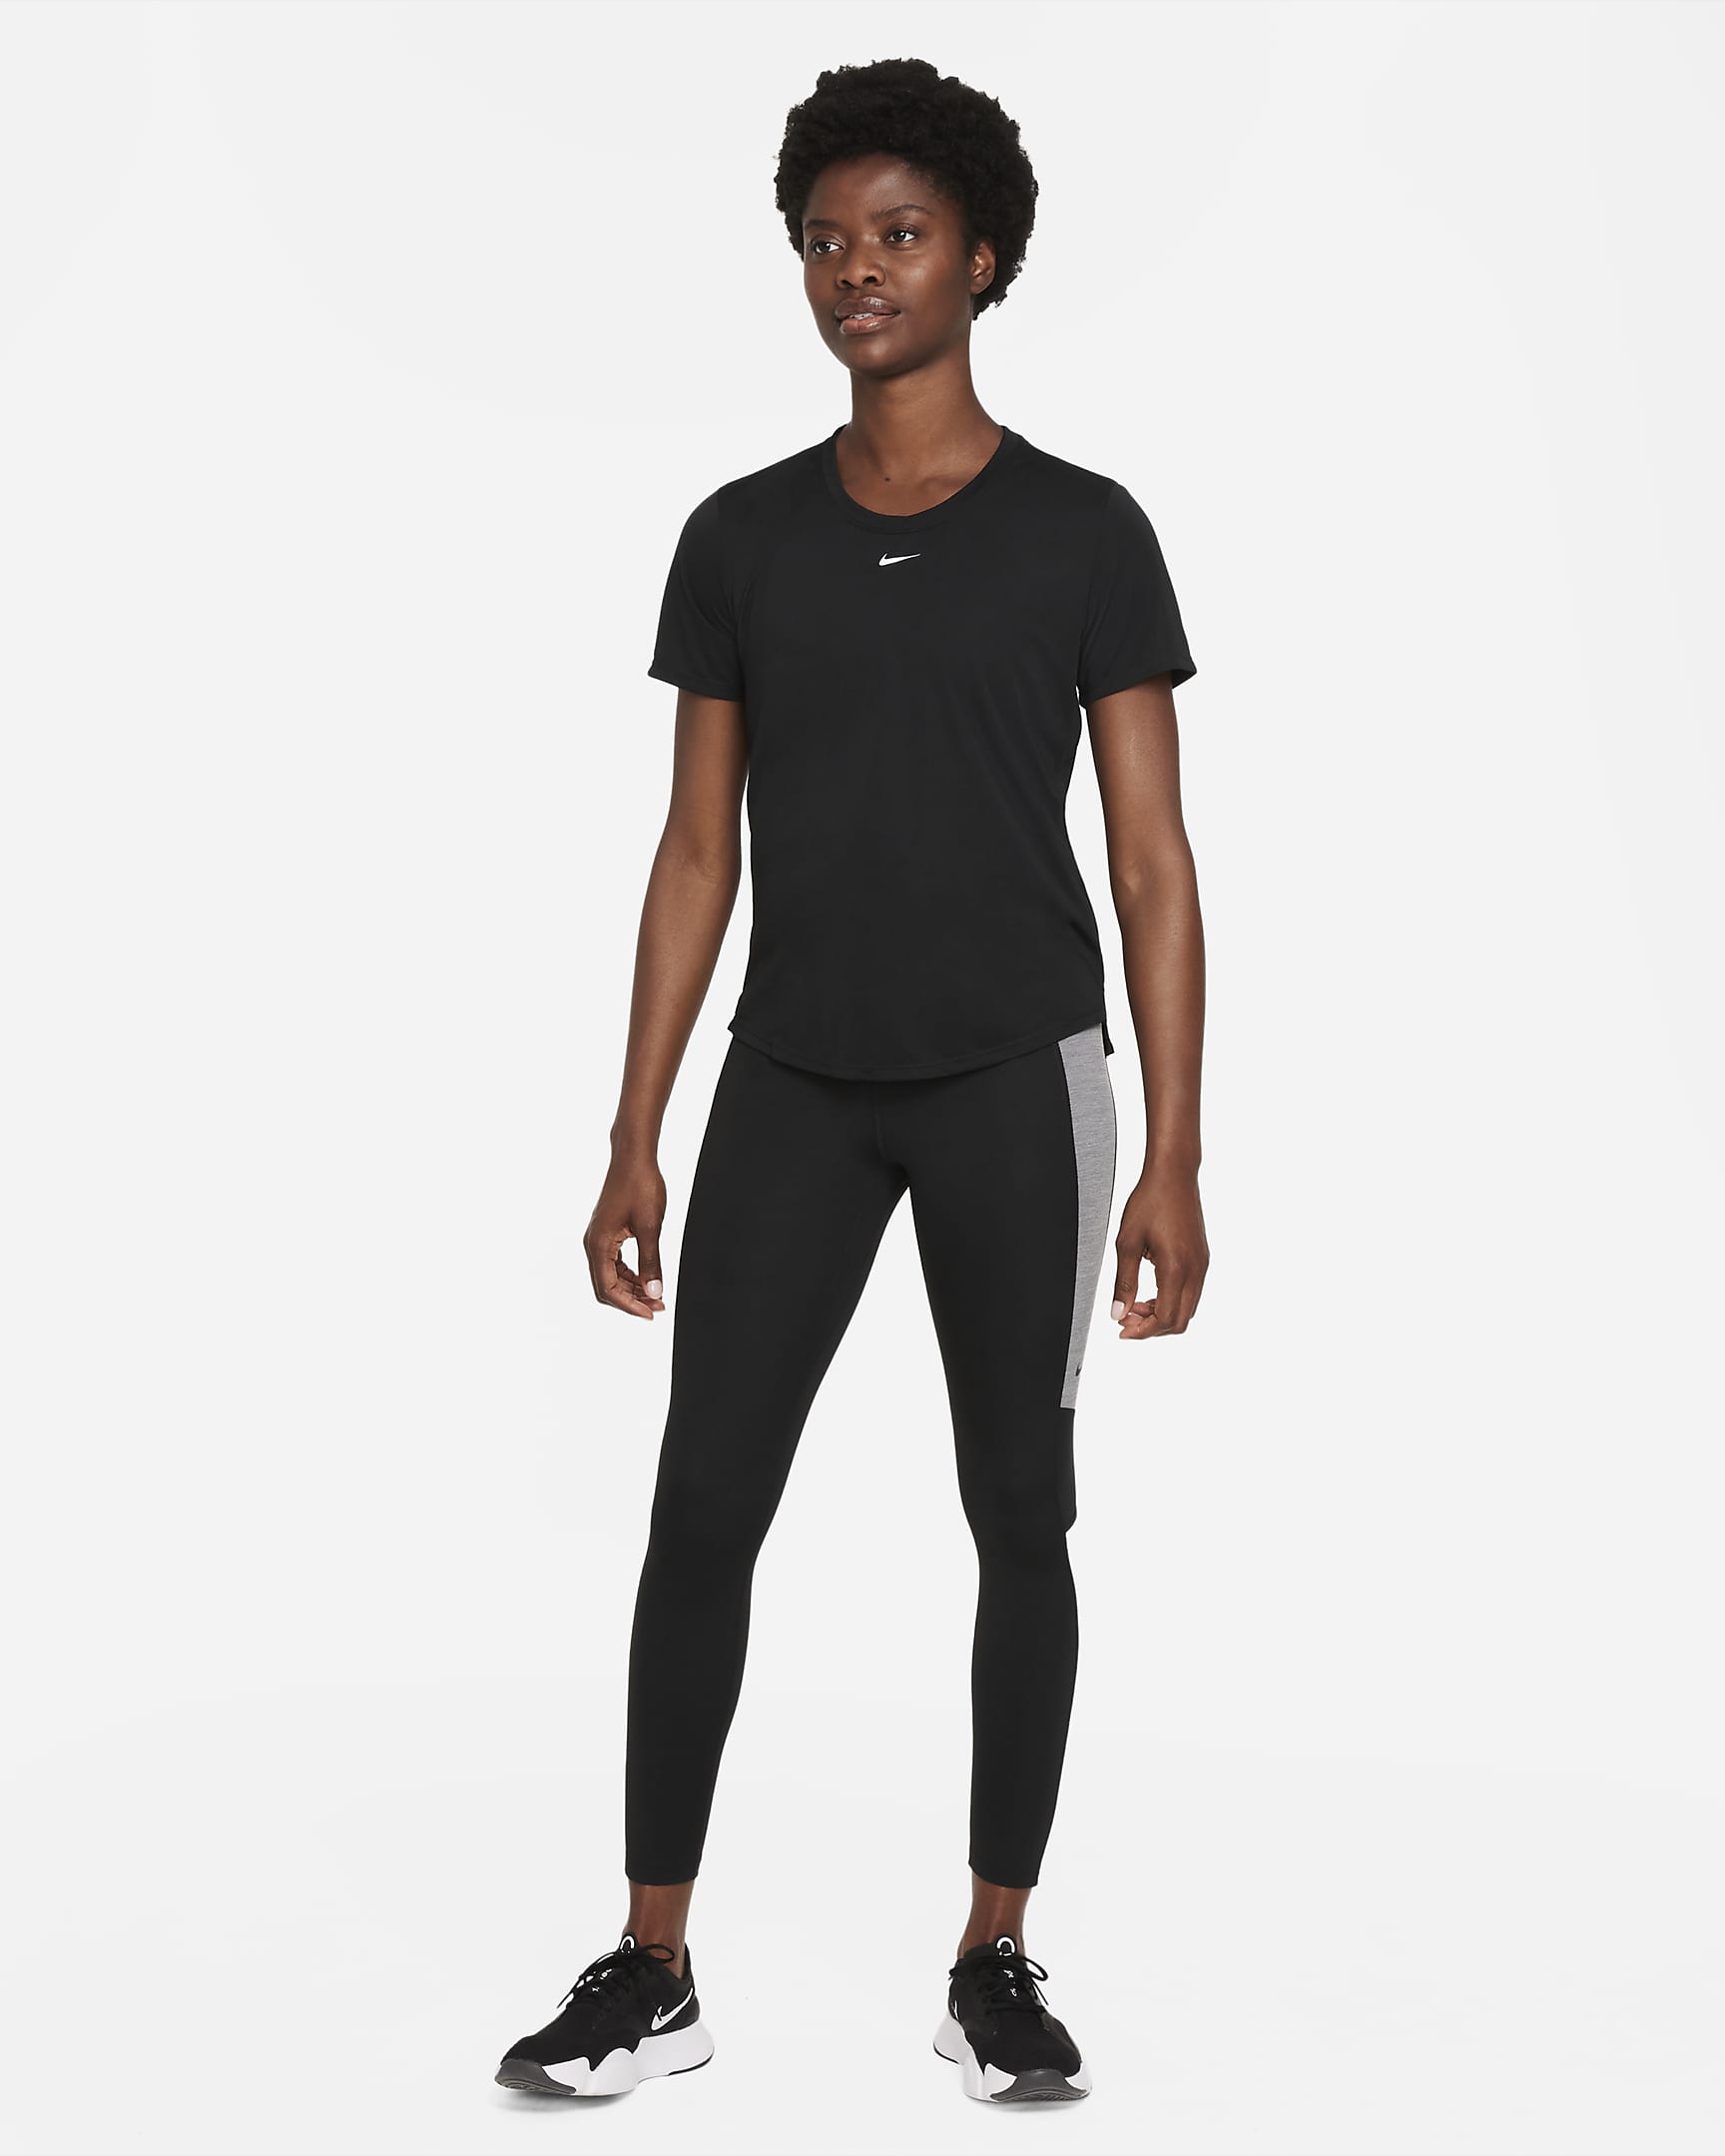 Nike Dri-FIT One Women's Standard-Fit Short-Sleeve Top. Nike SK